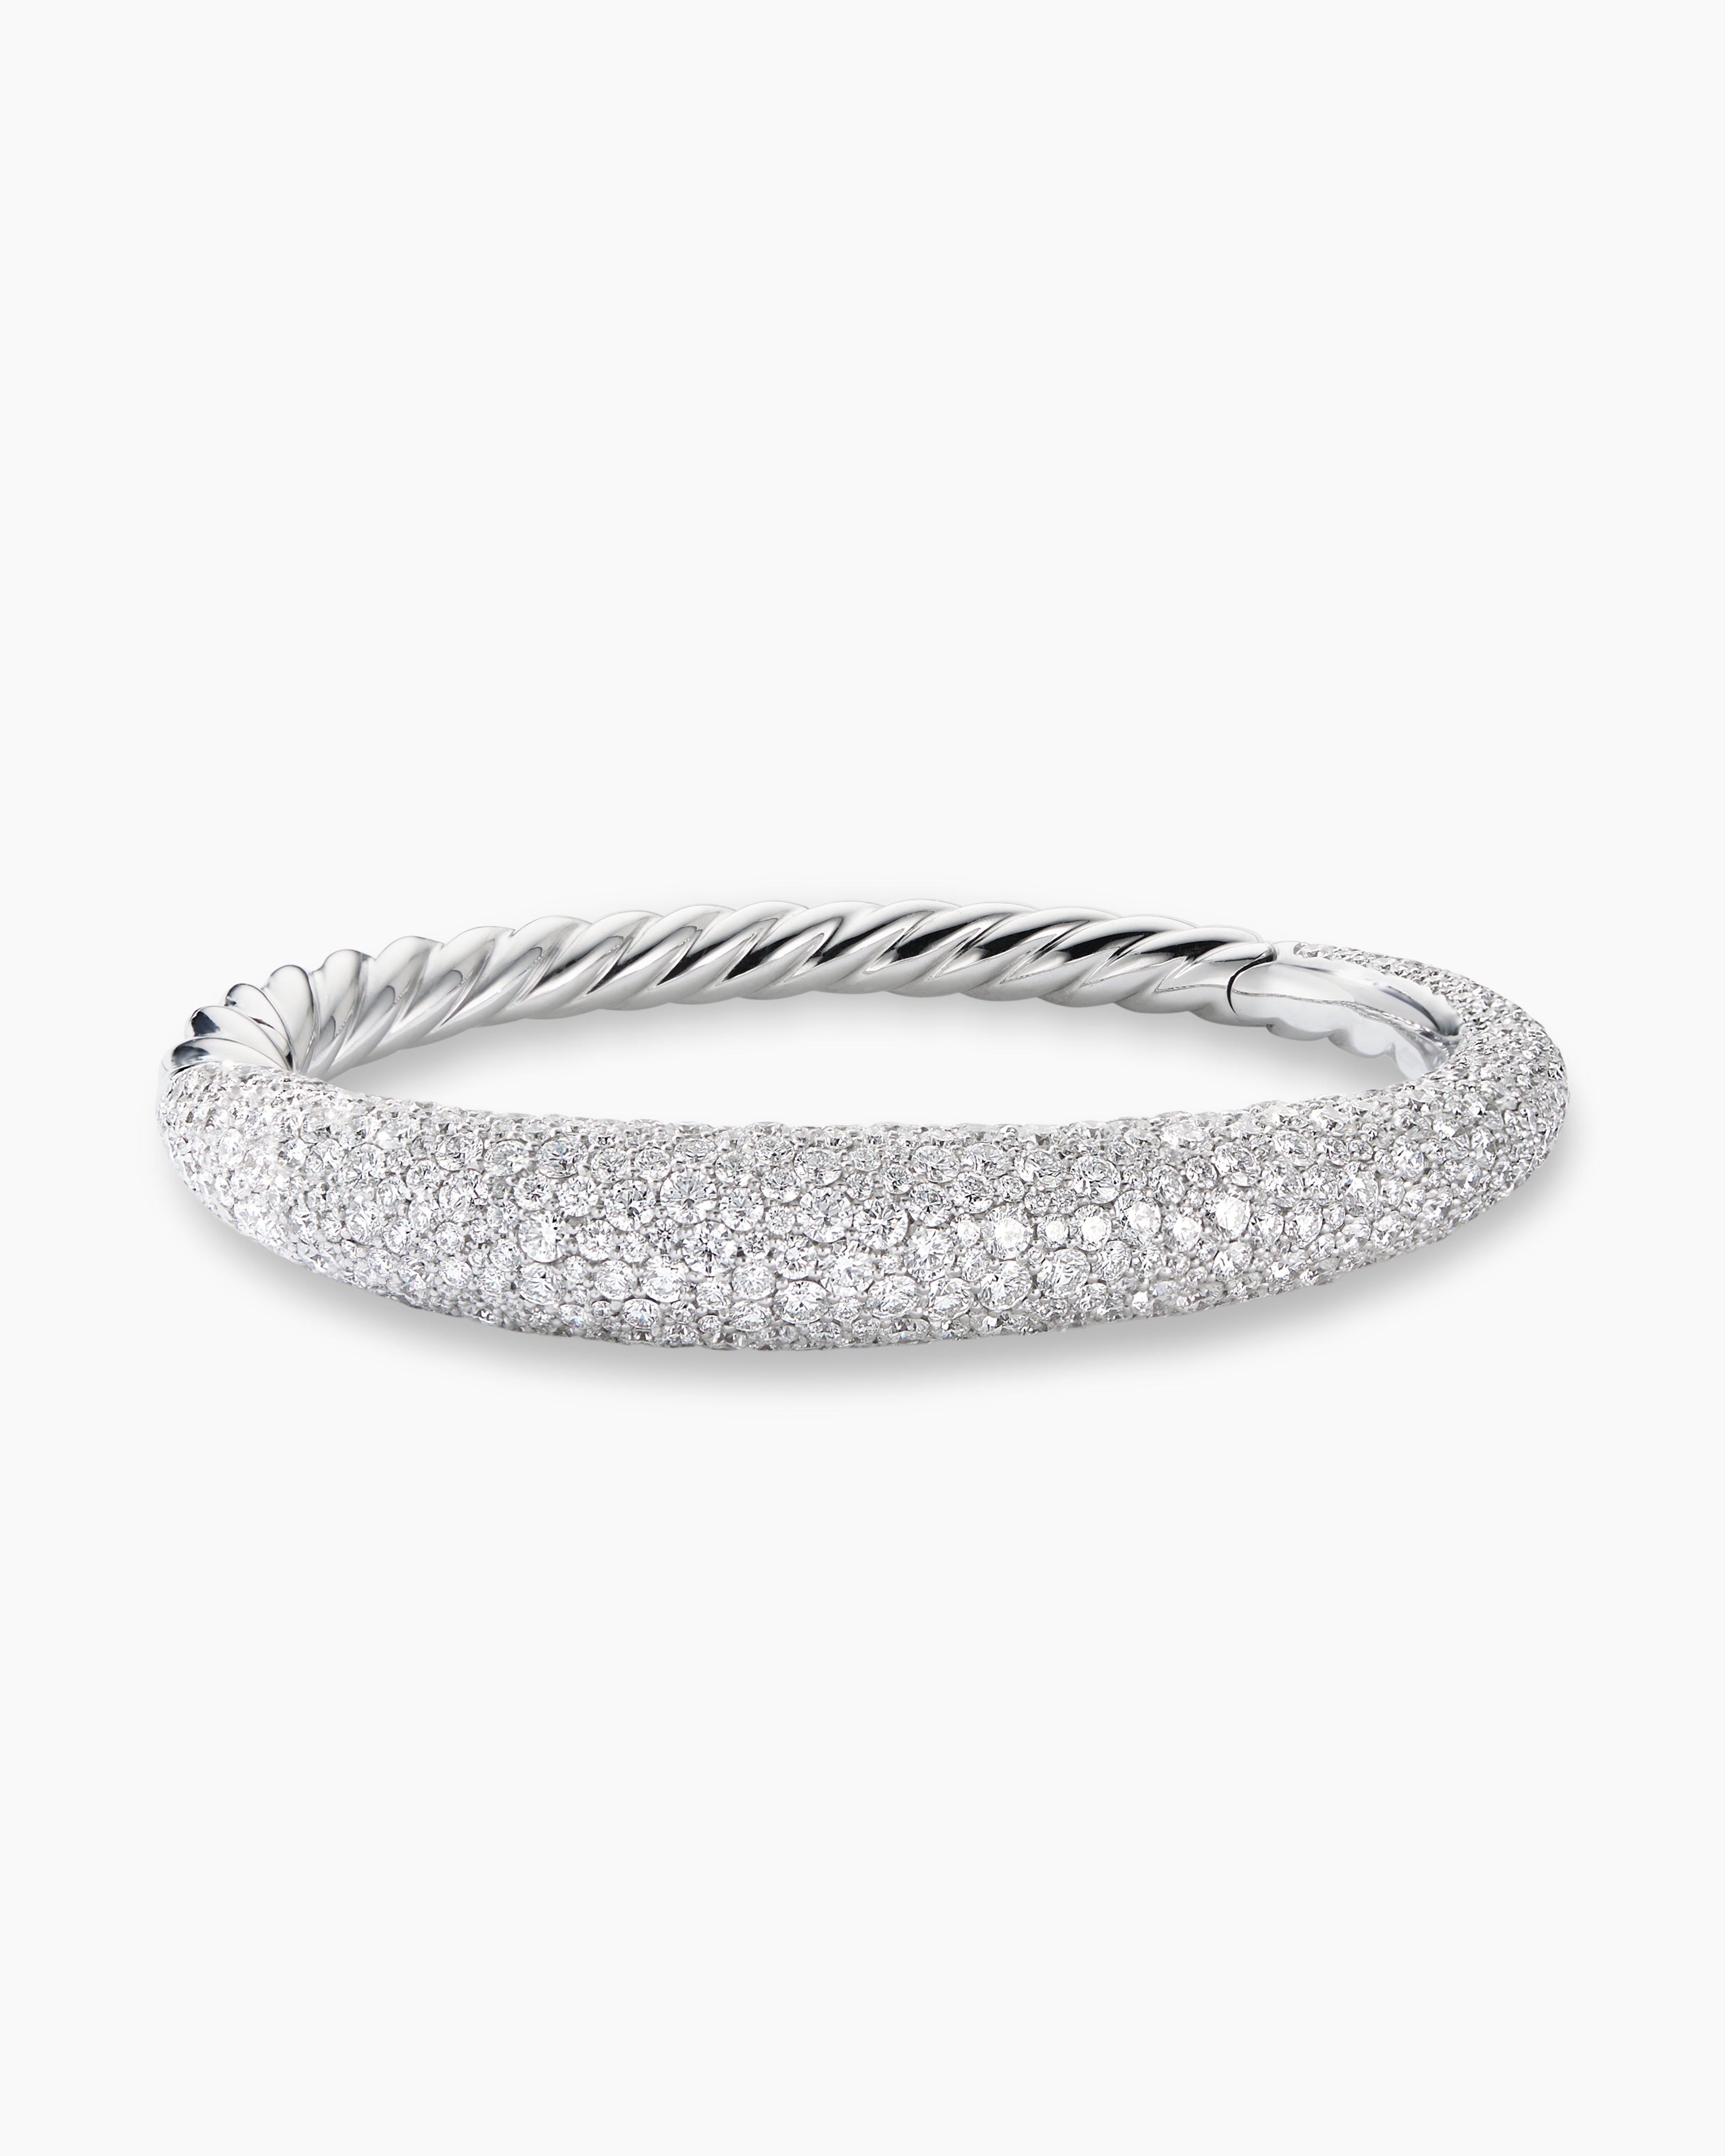 Pure Form® Smooth Bracelet in 18K White Gold with Full Pavé Diamonds, 9.5mm  | David Yurman